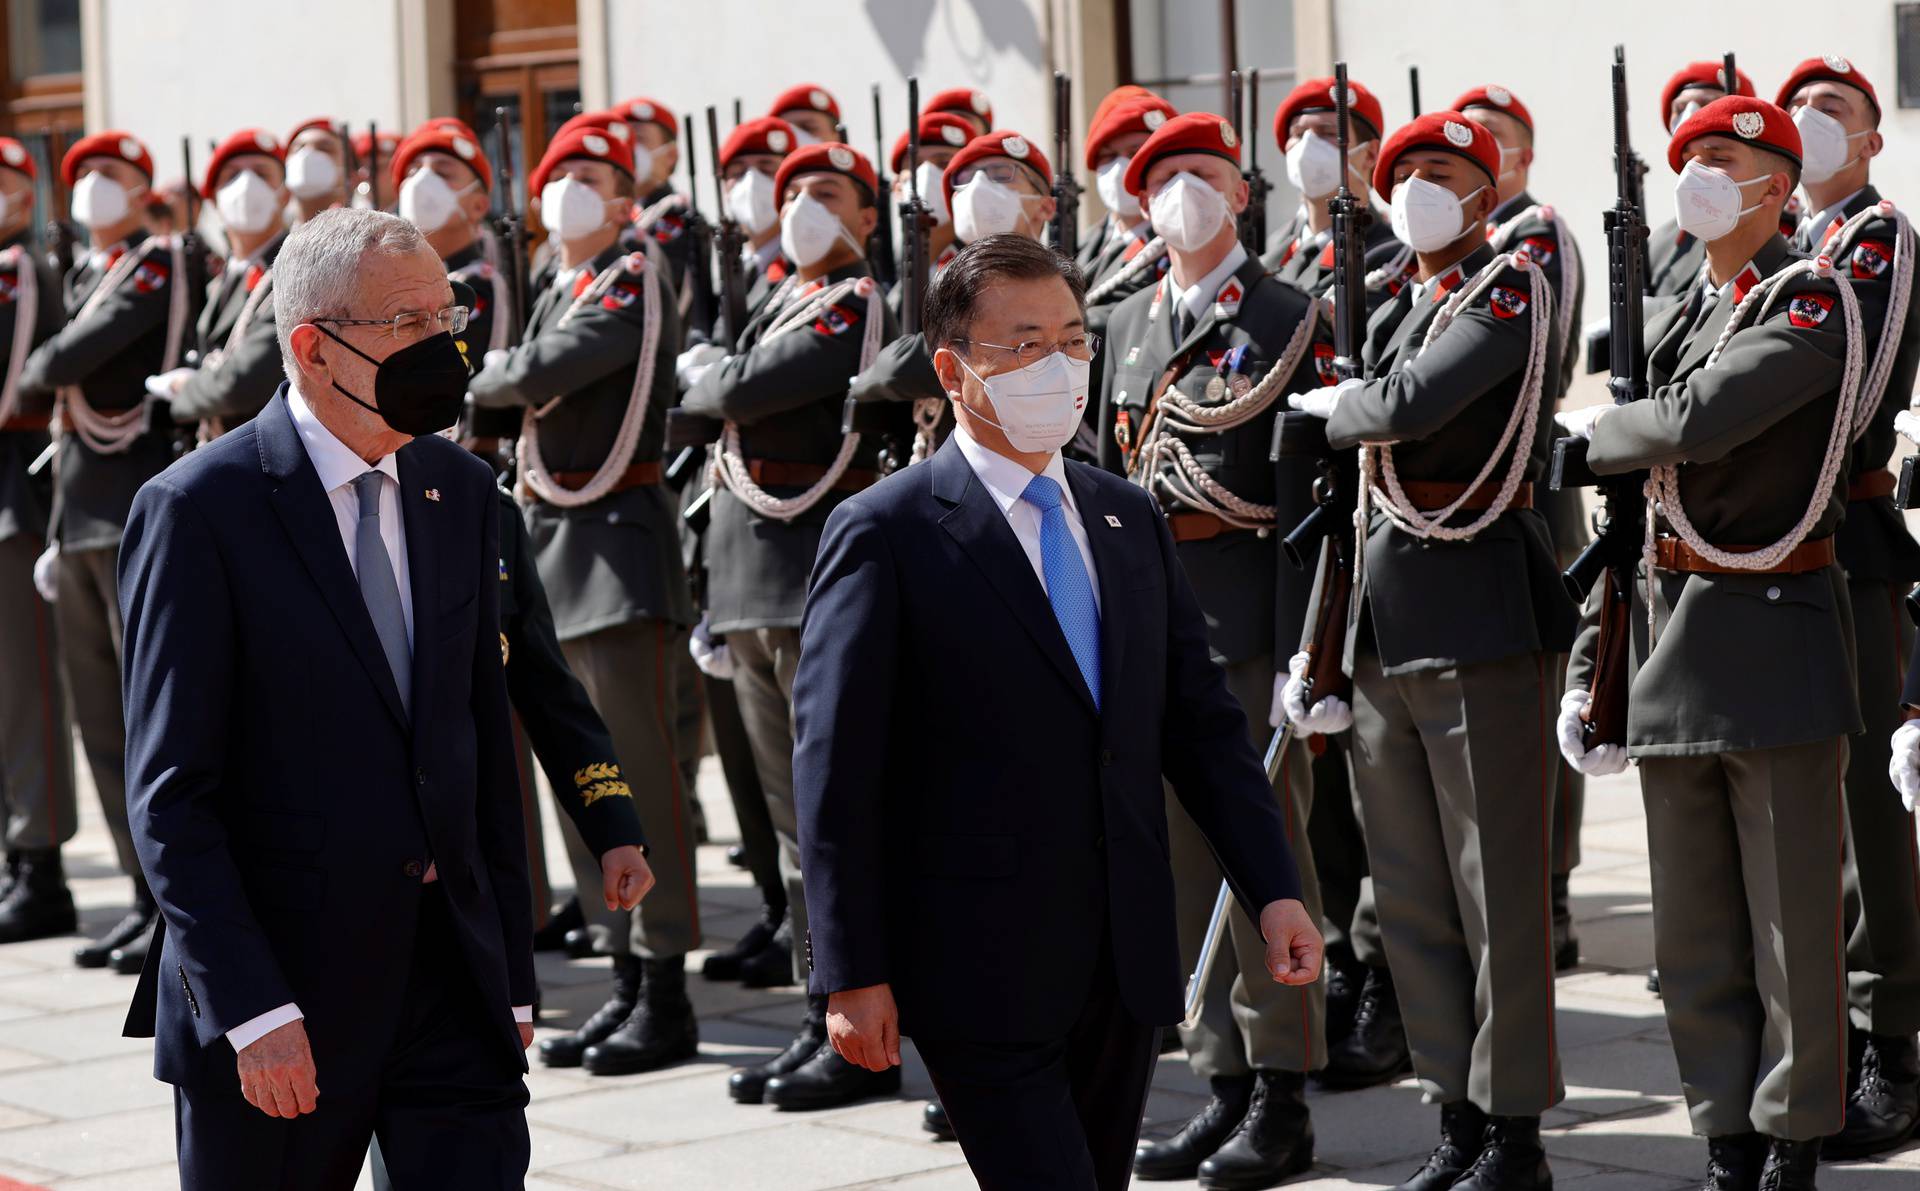 South Korea's President Moon Jae-in on state visit in Austria